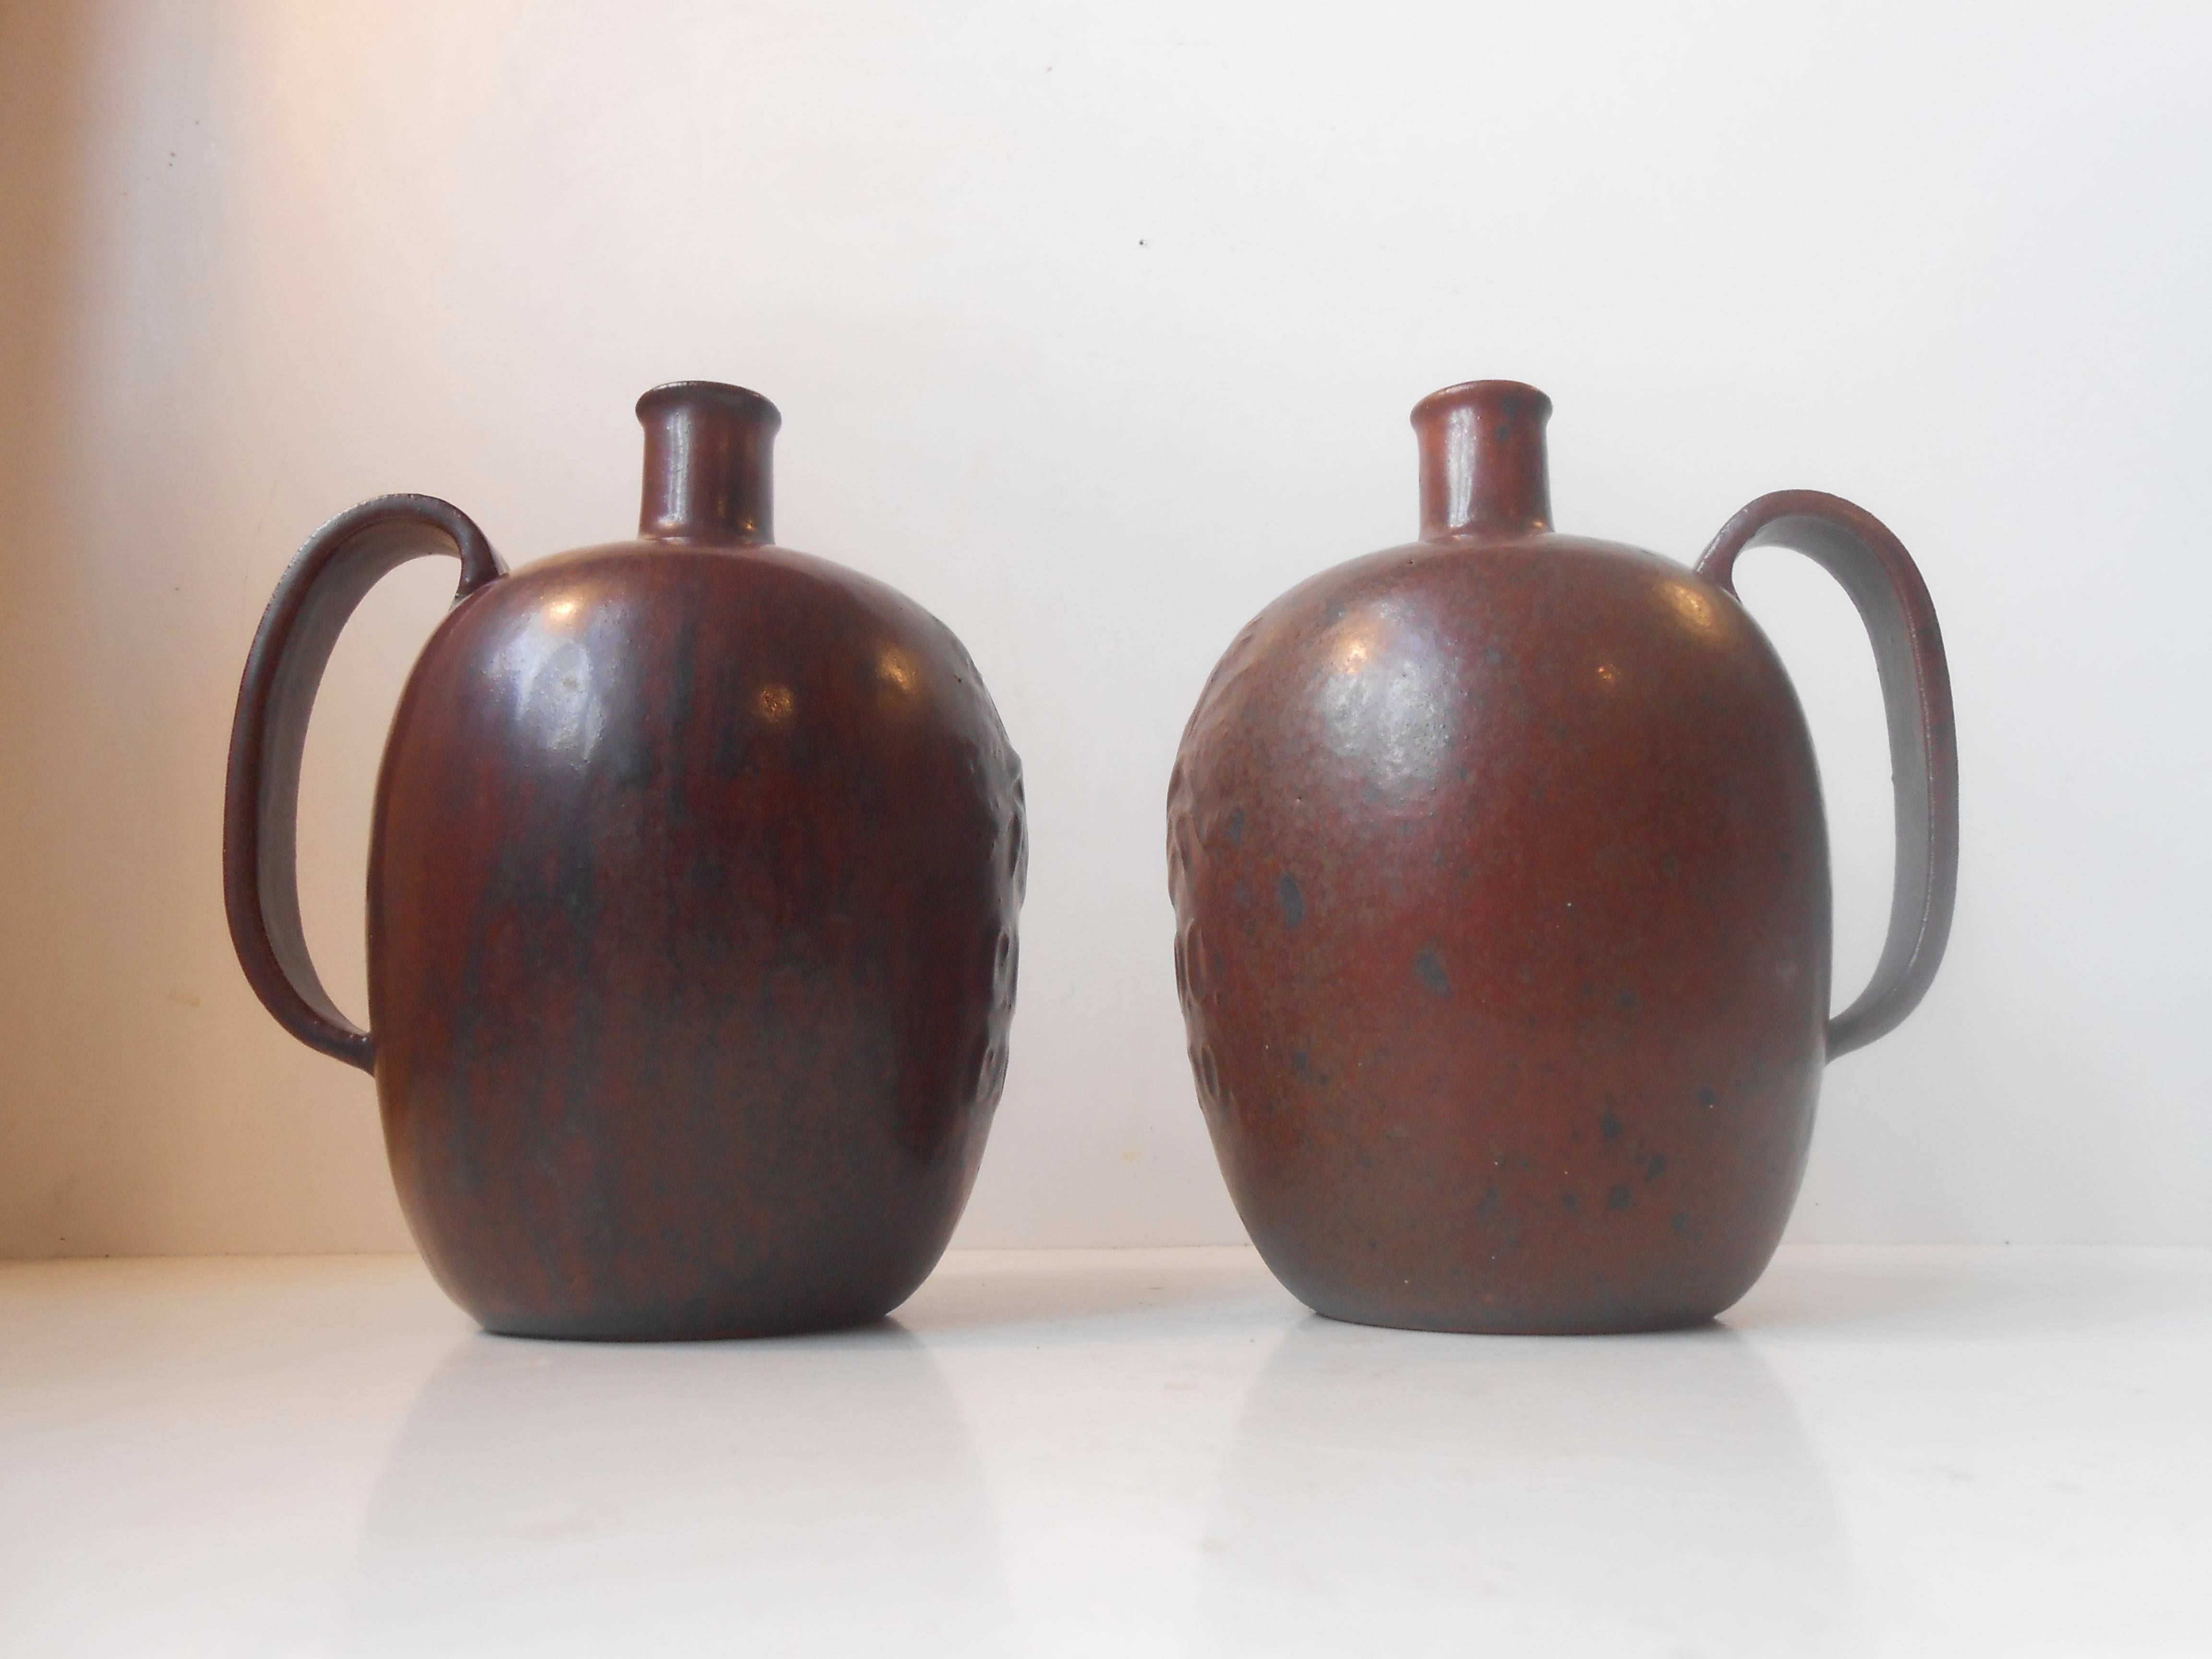 Arne Bang Glazed Stoneware Bottle Vases, 1930s For Sale 1